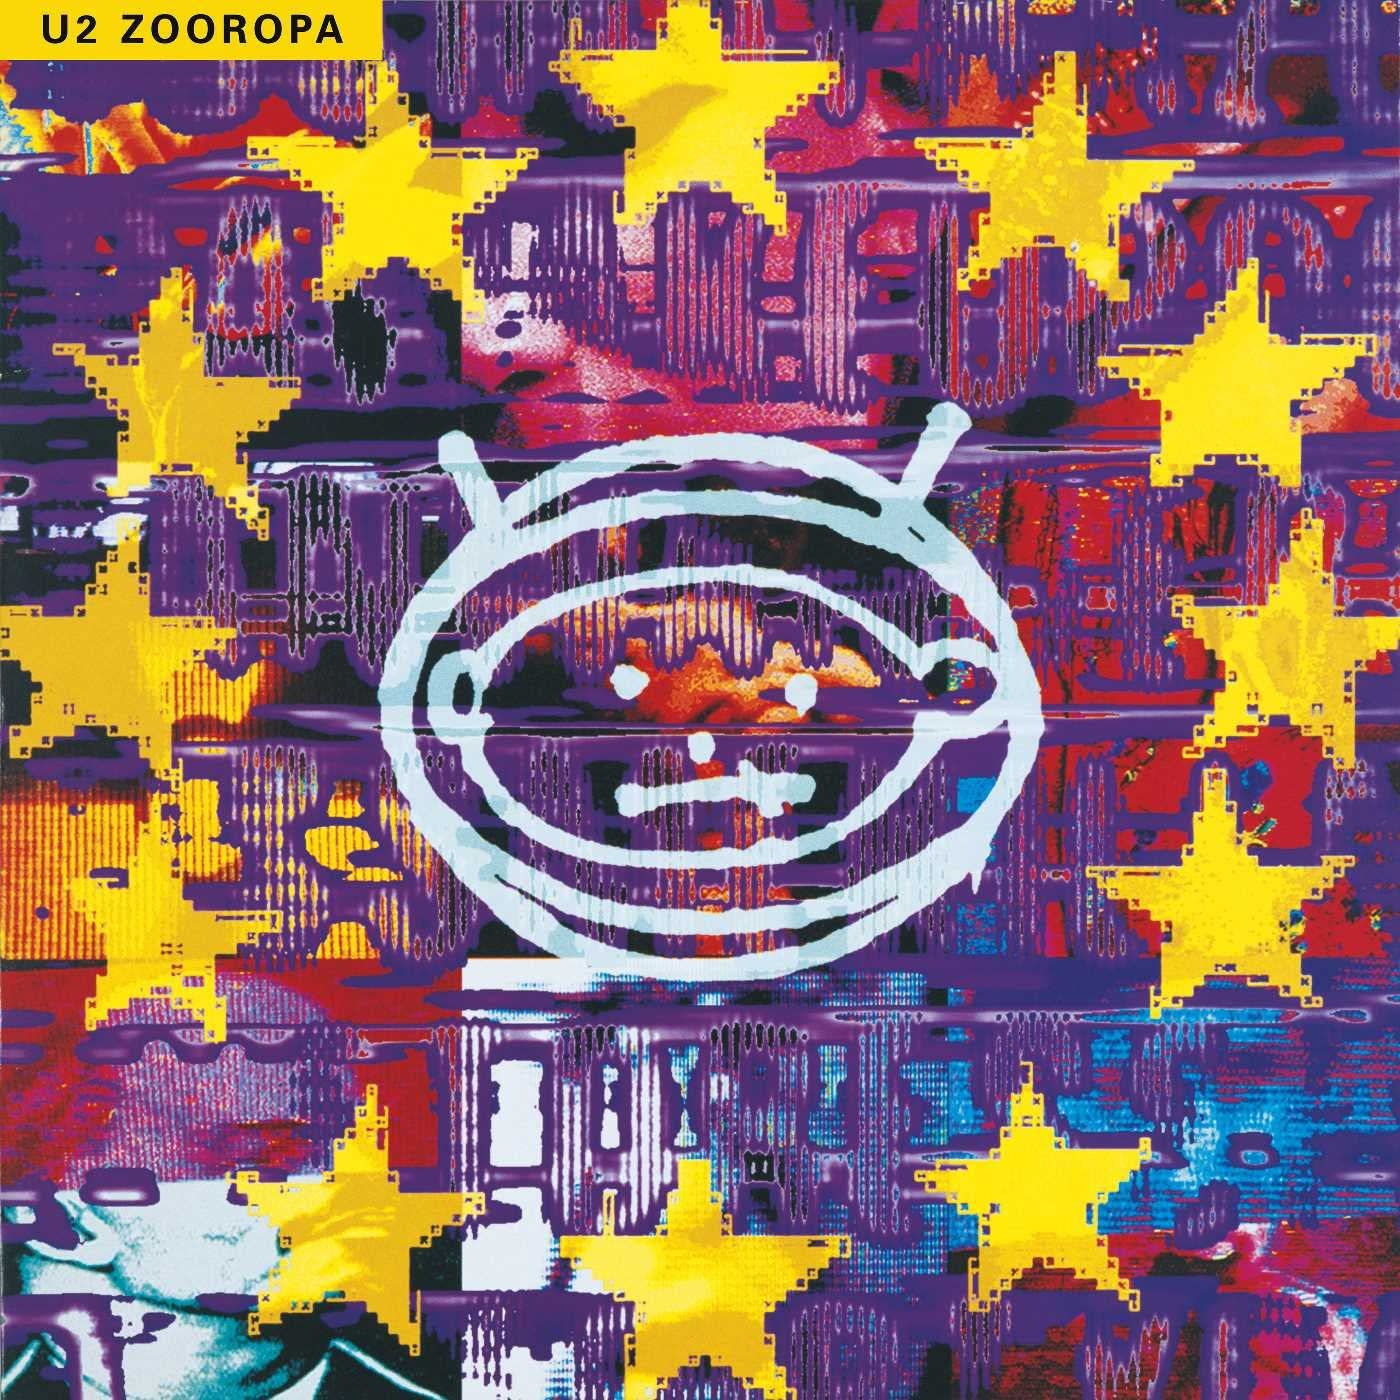 U2 Zooropa